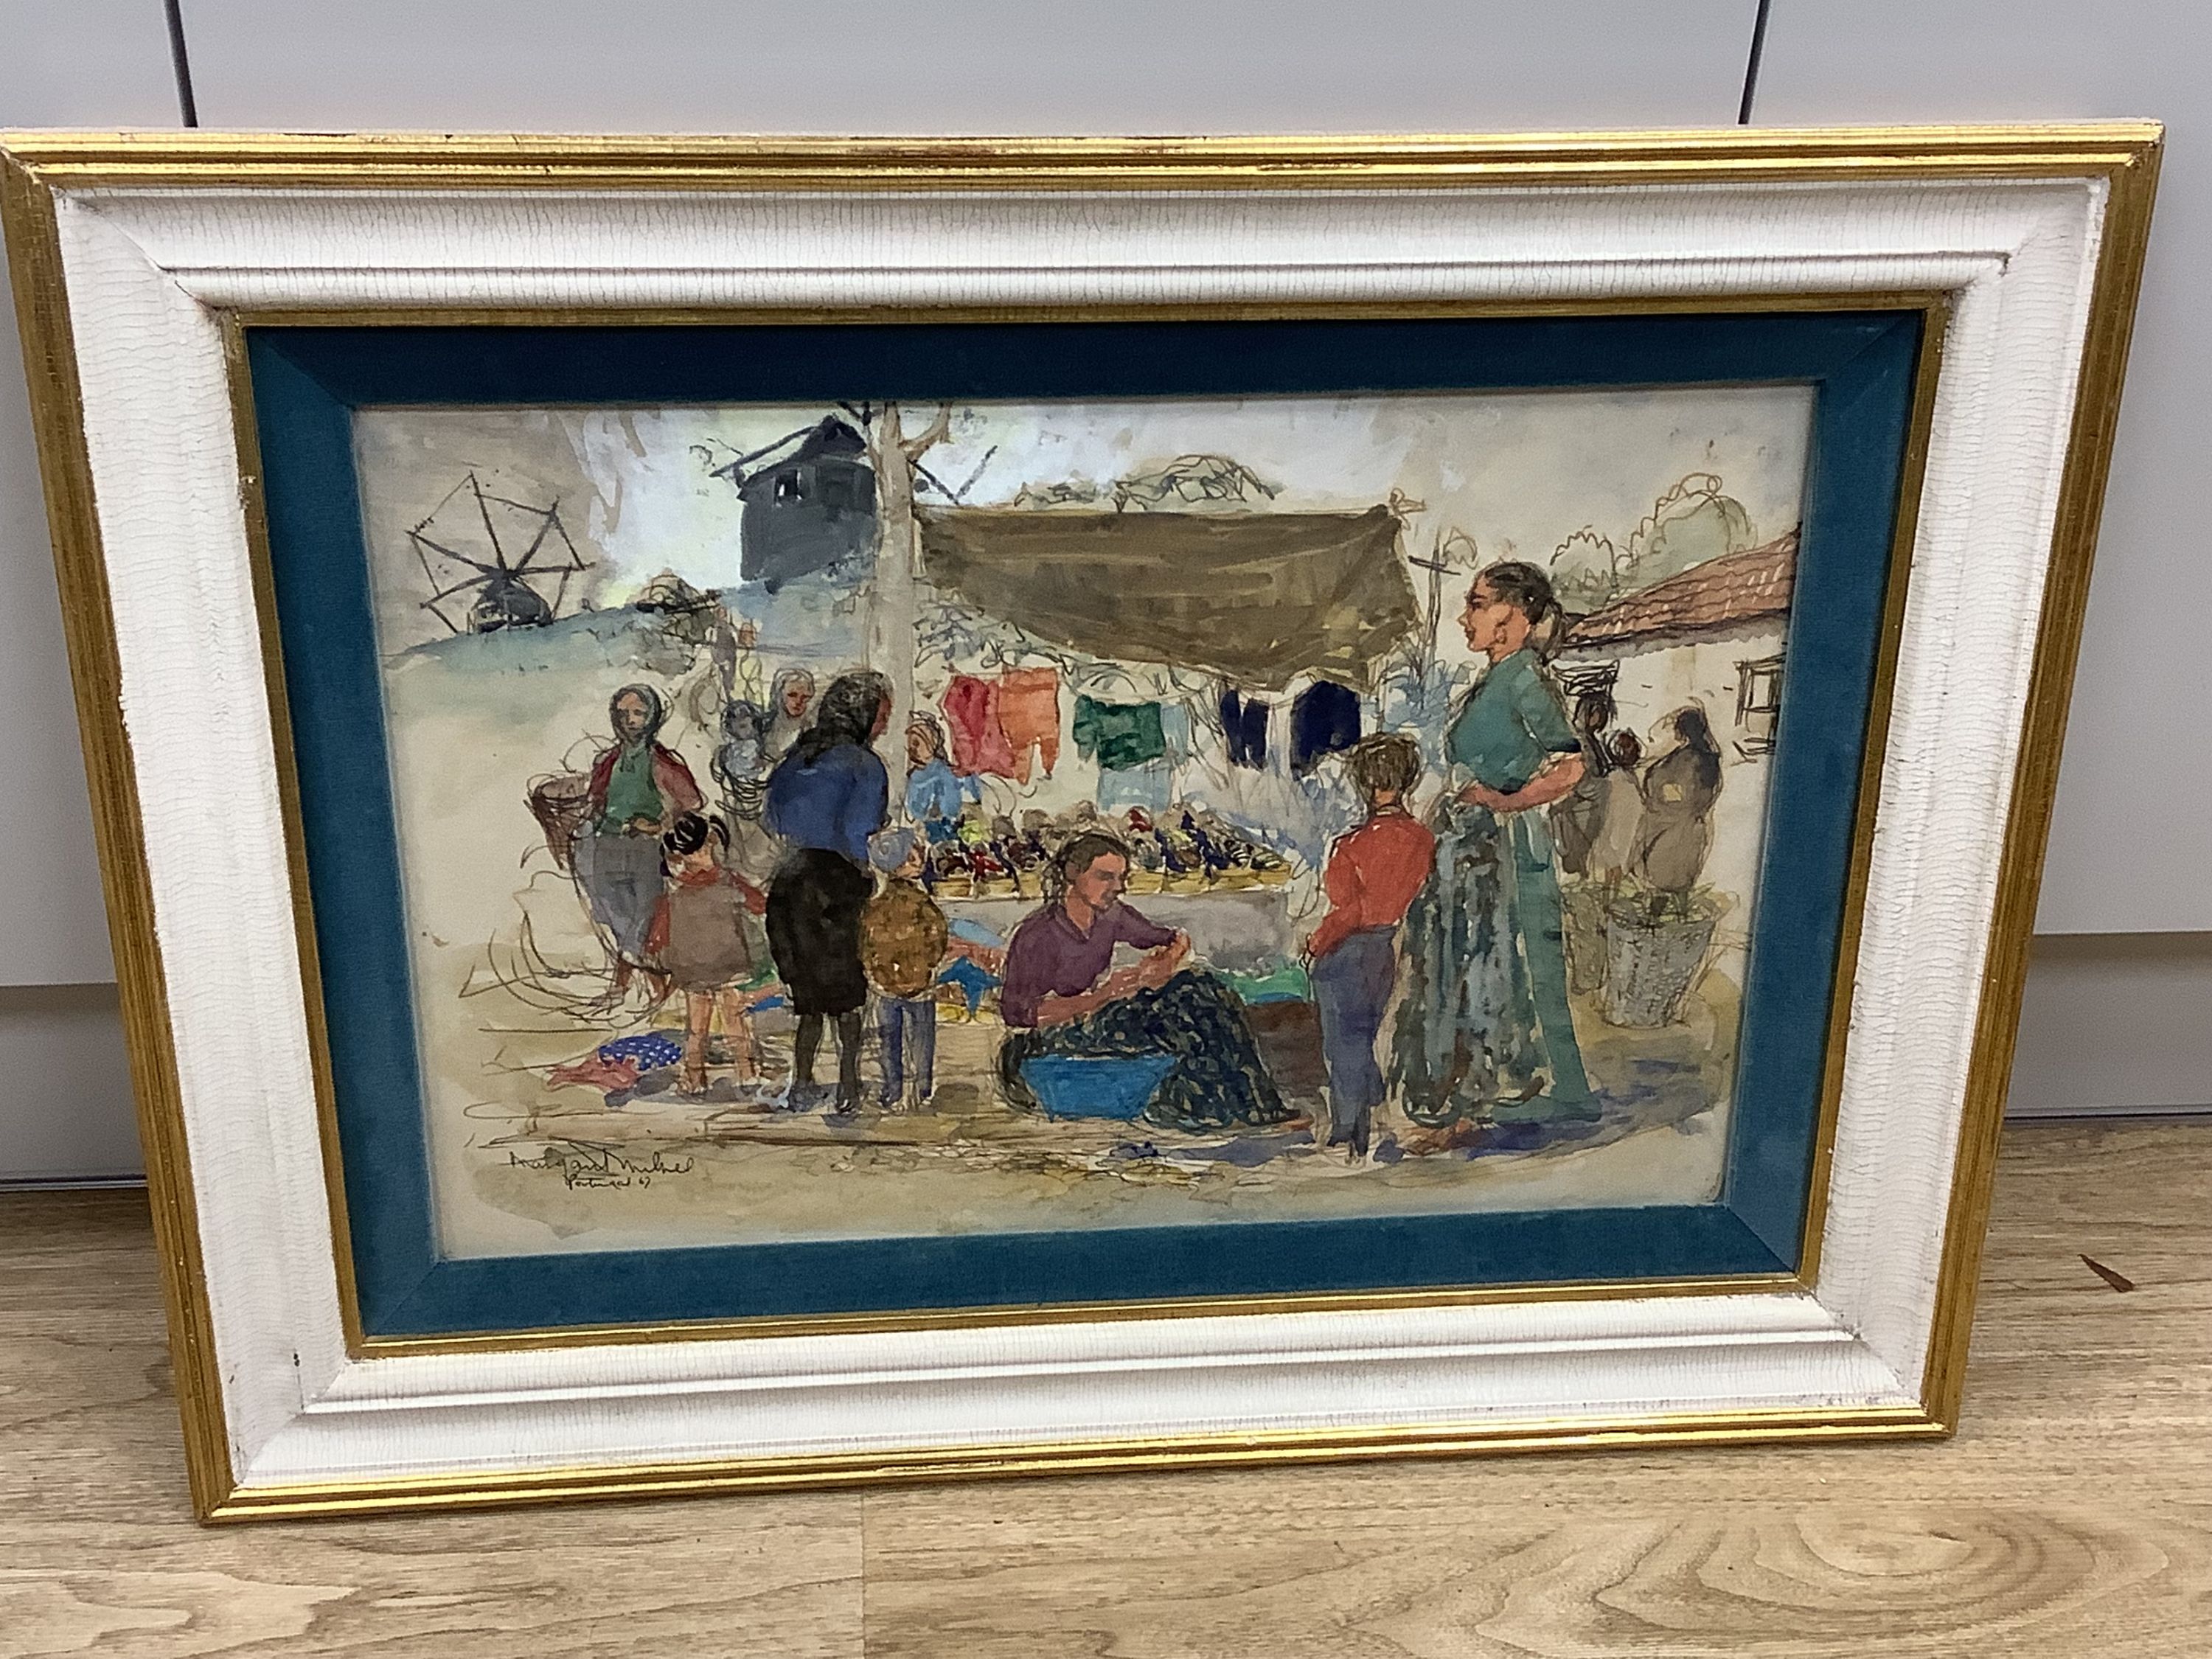 Margaret Milnes (1908-1998), two watercolours, Market Scene, Portugal and Fishermen, Portugal, 33 x 50cm & 30 x 47cm